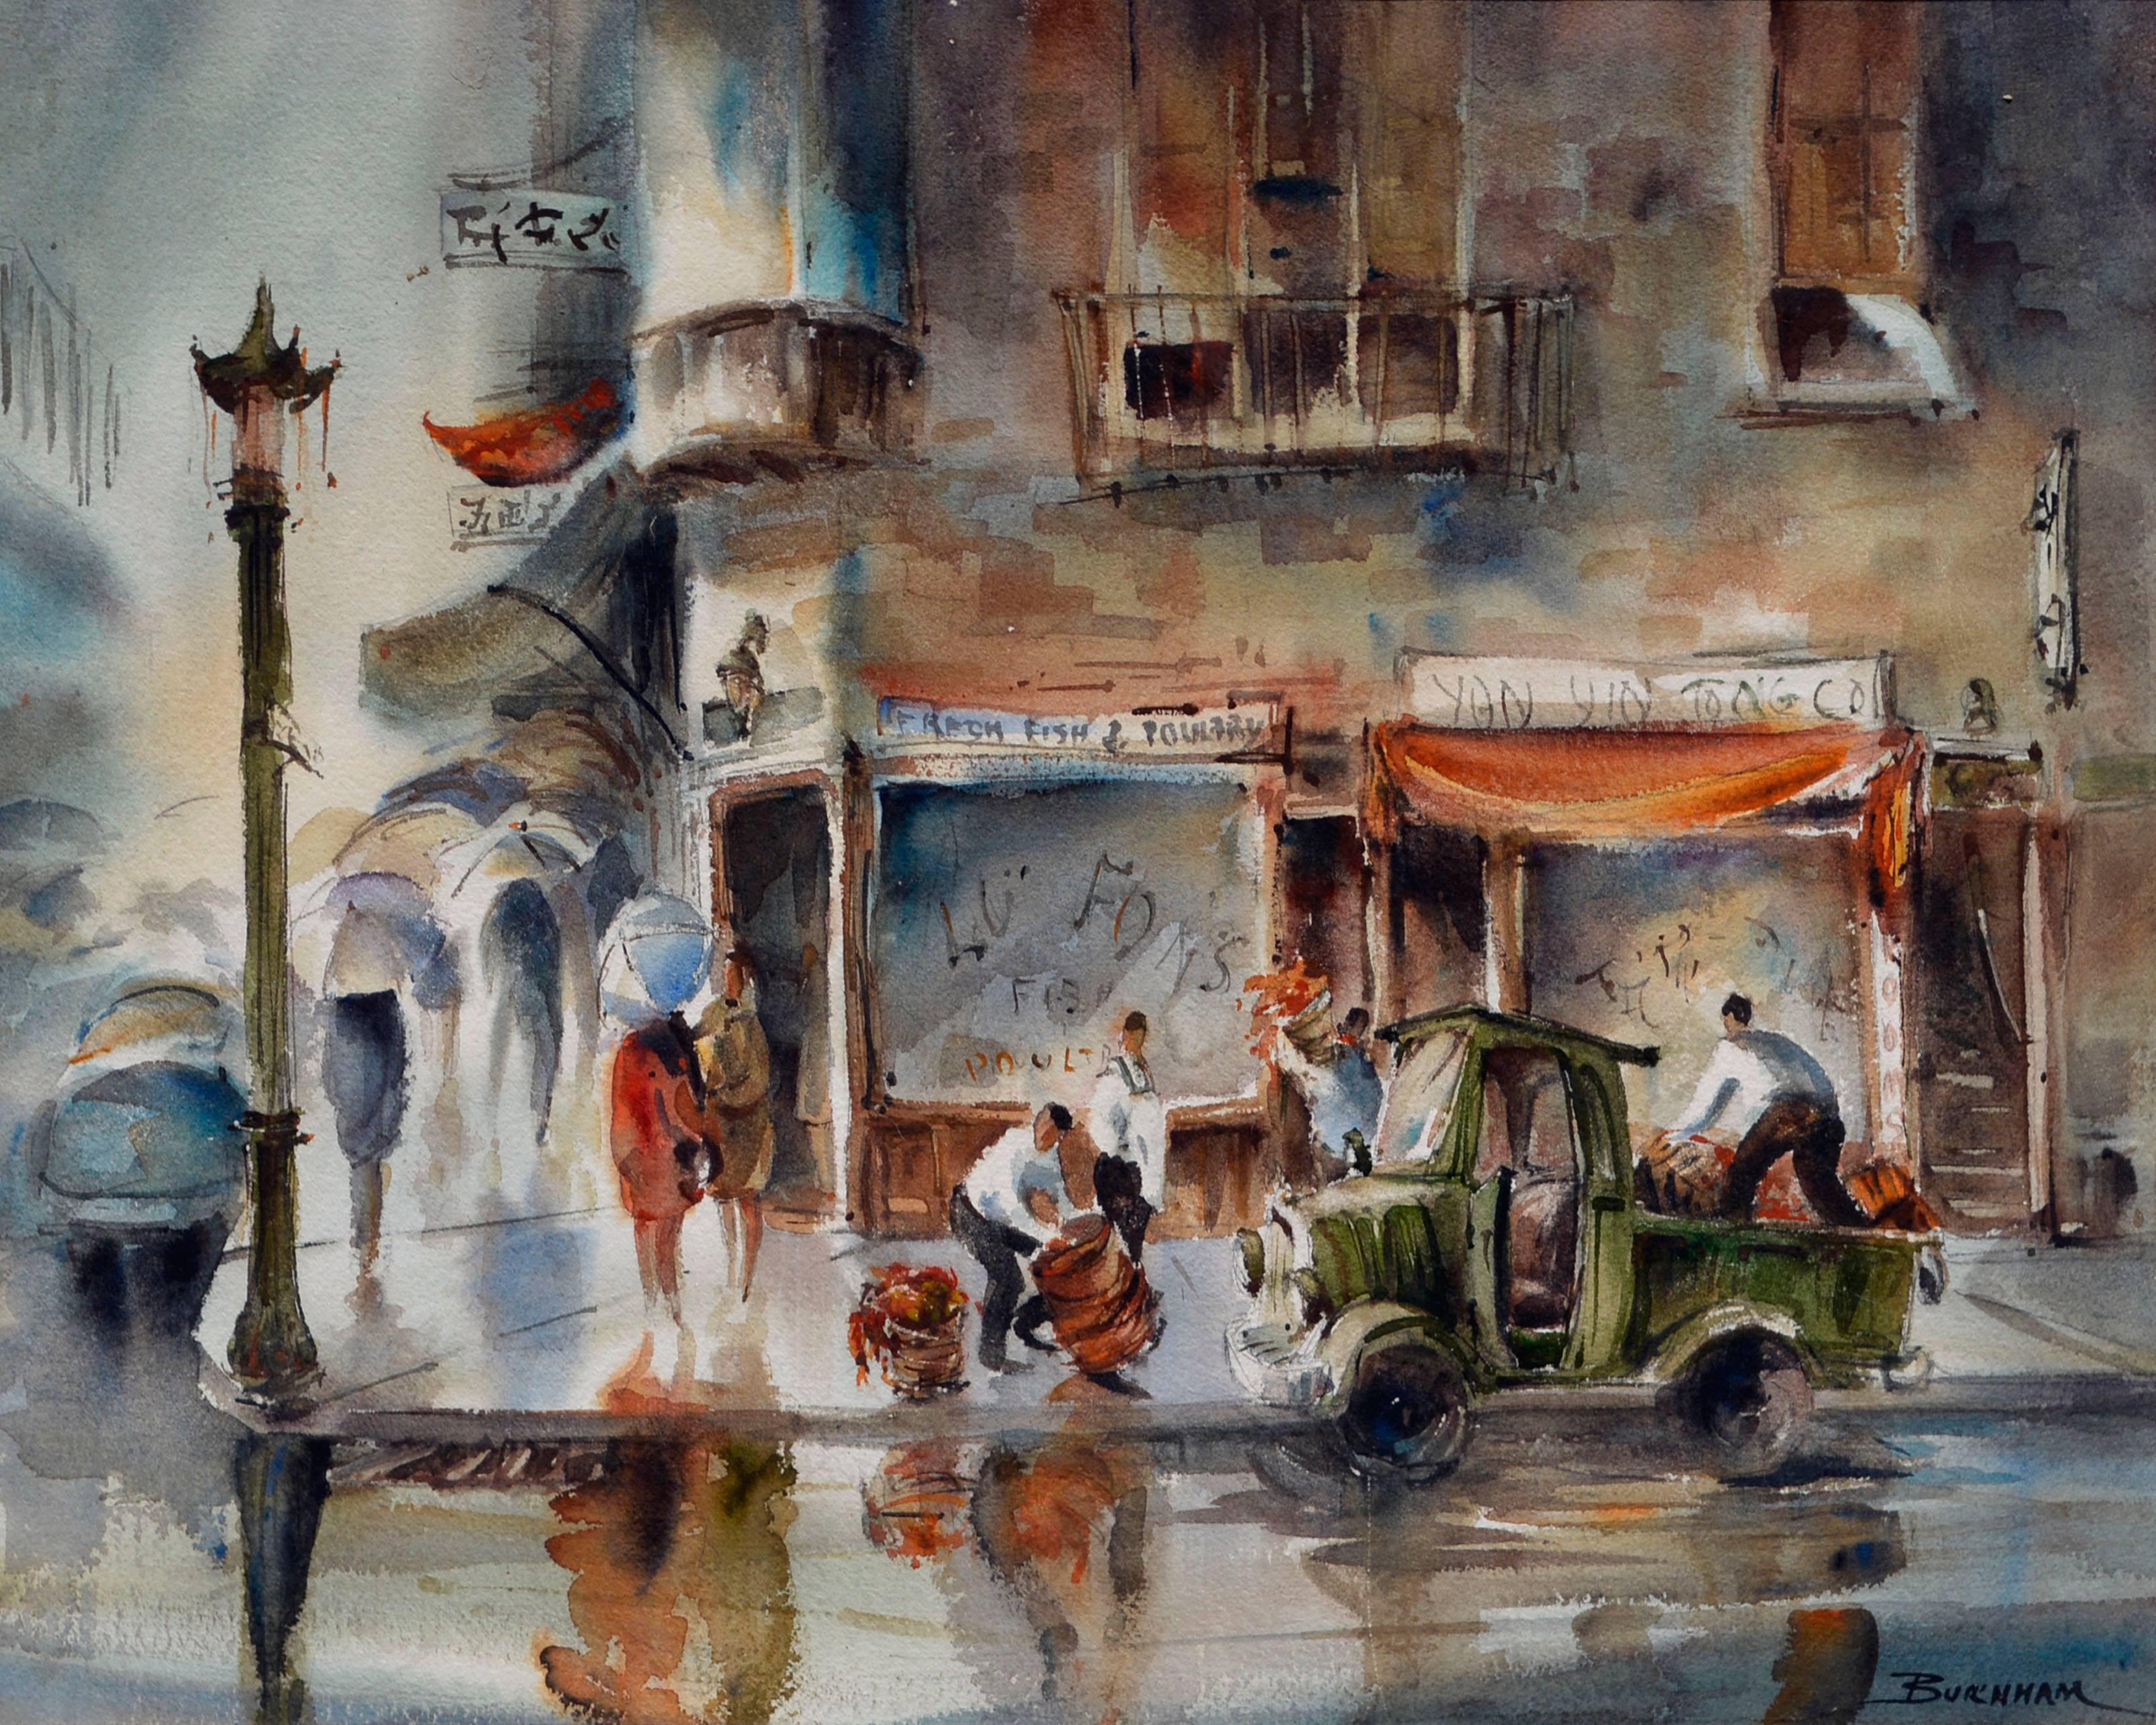 China Town San Francisco Street Scene - Painting by Jane Burnham